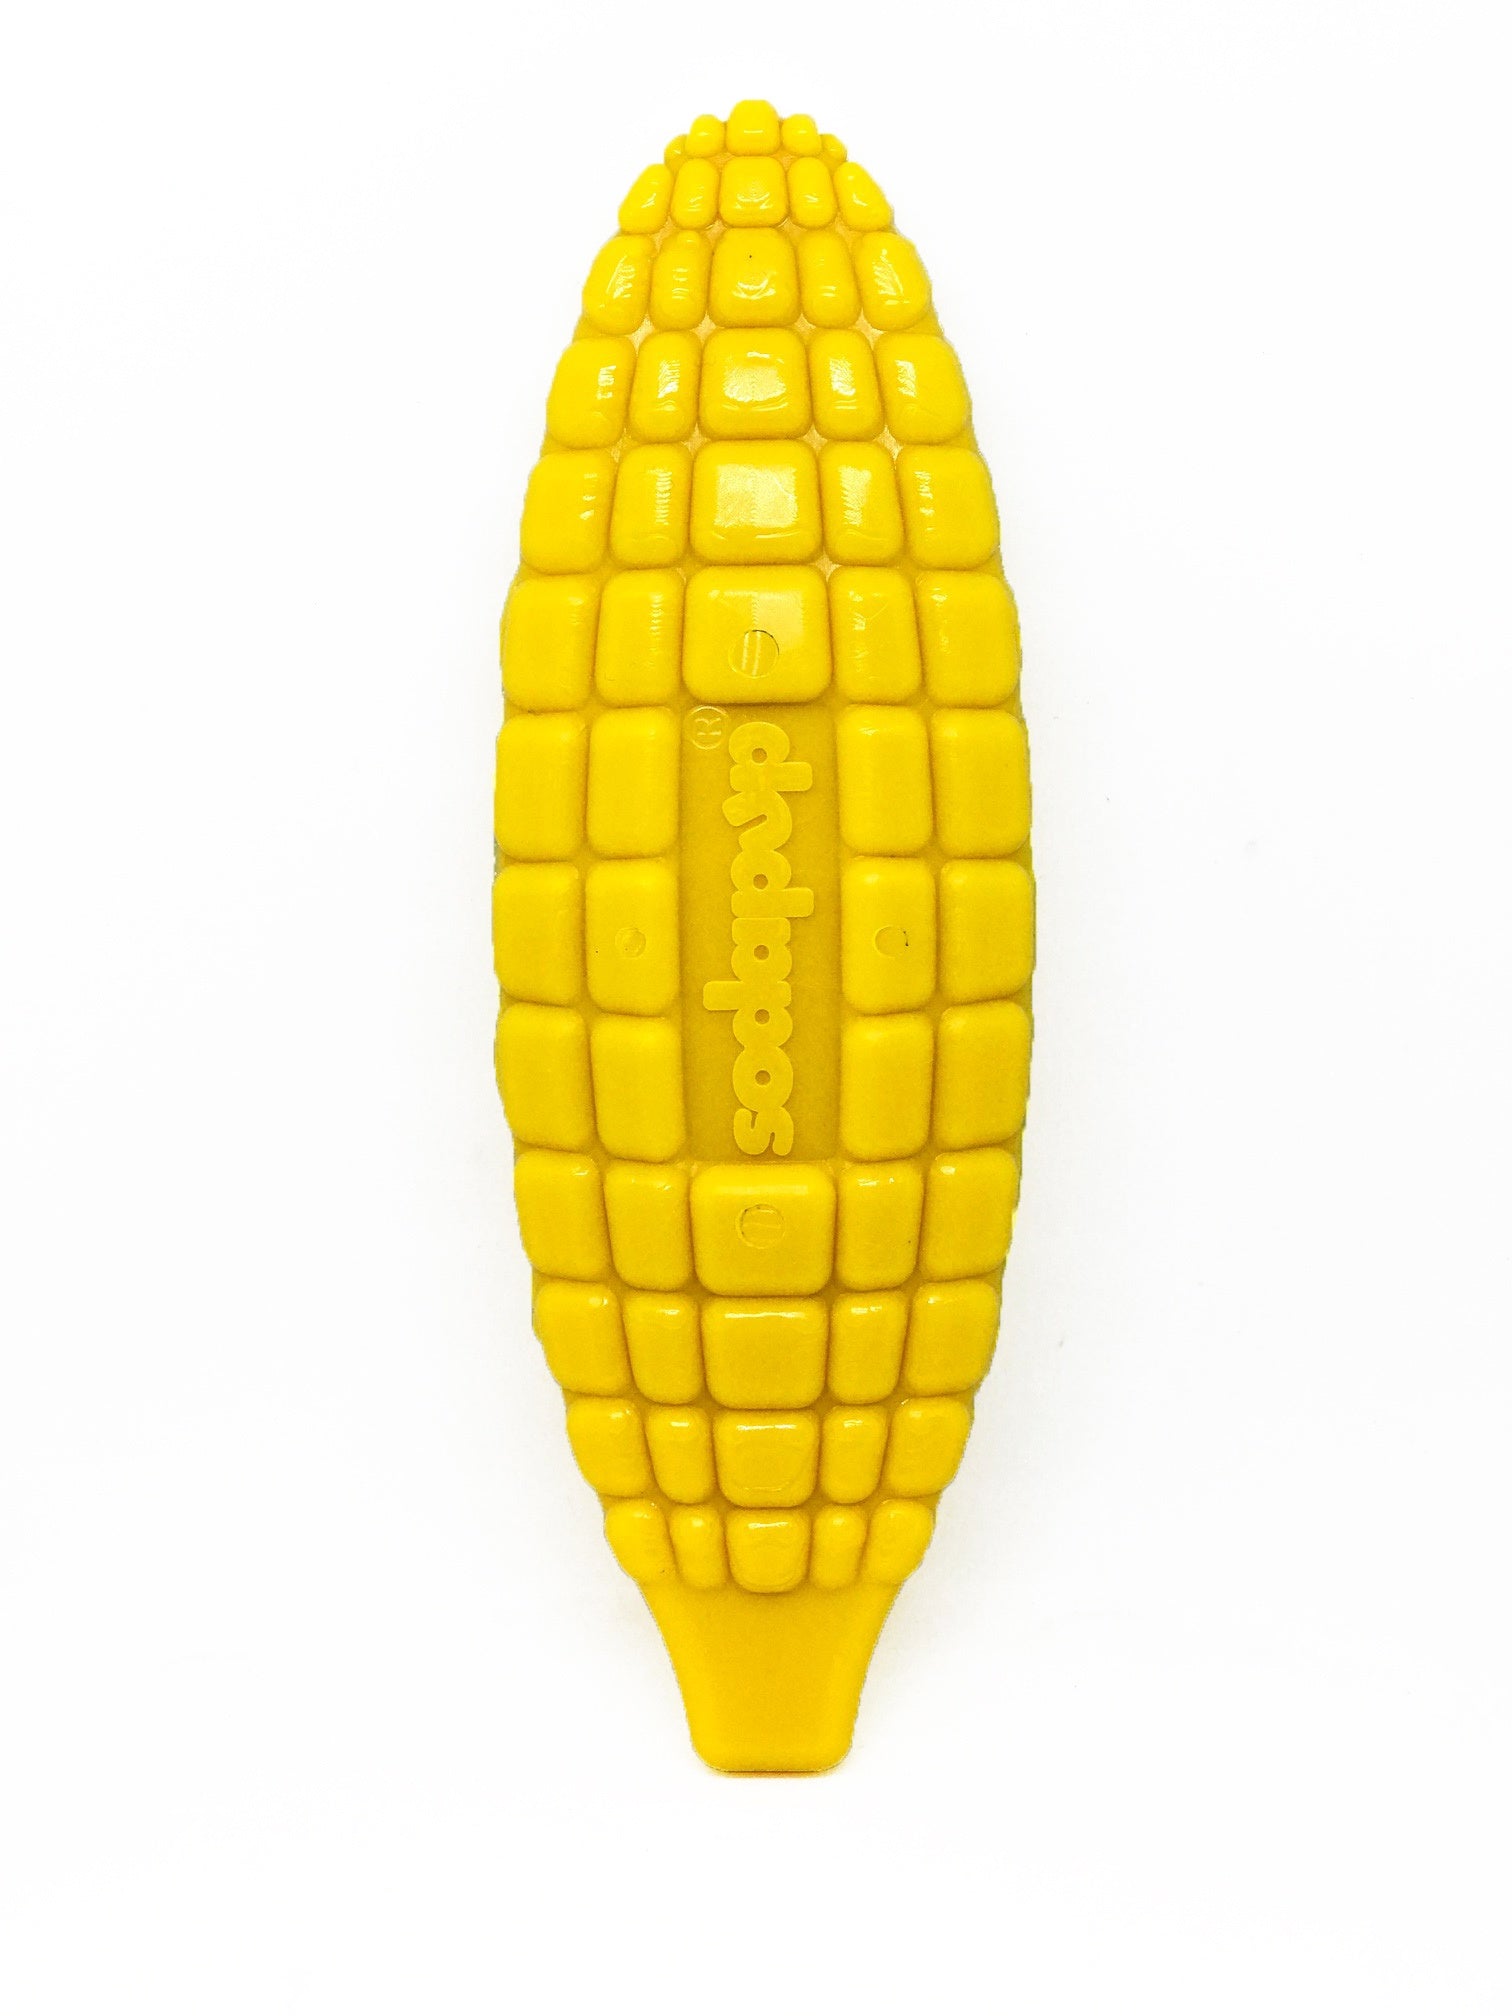 SodaPup Corn on the Cob Chew